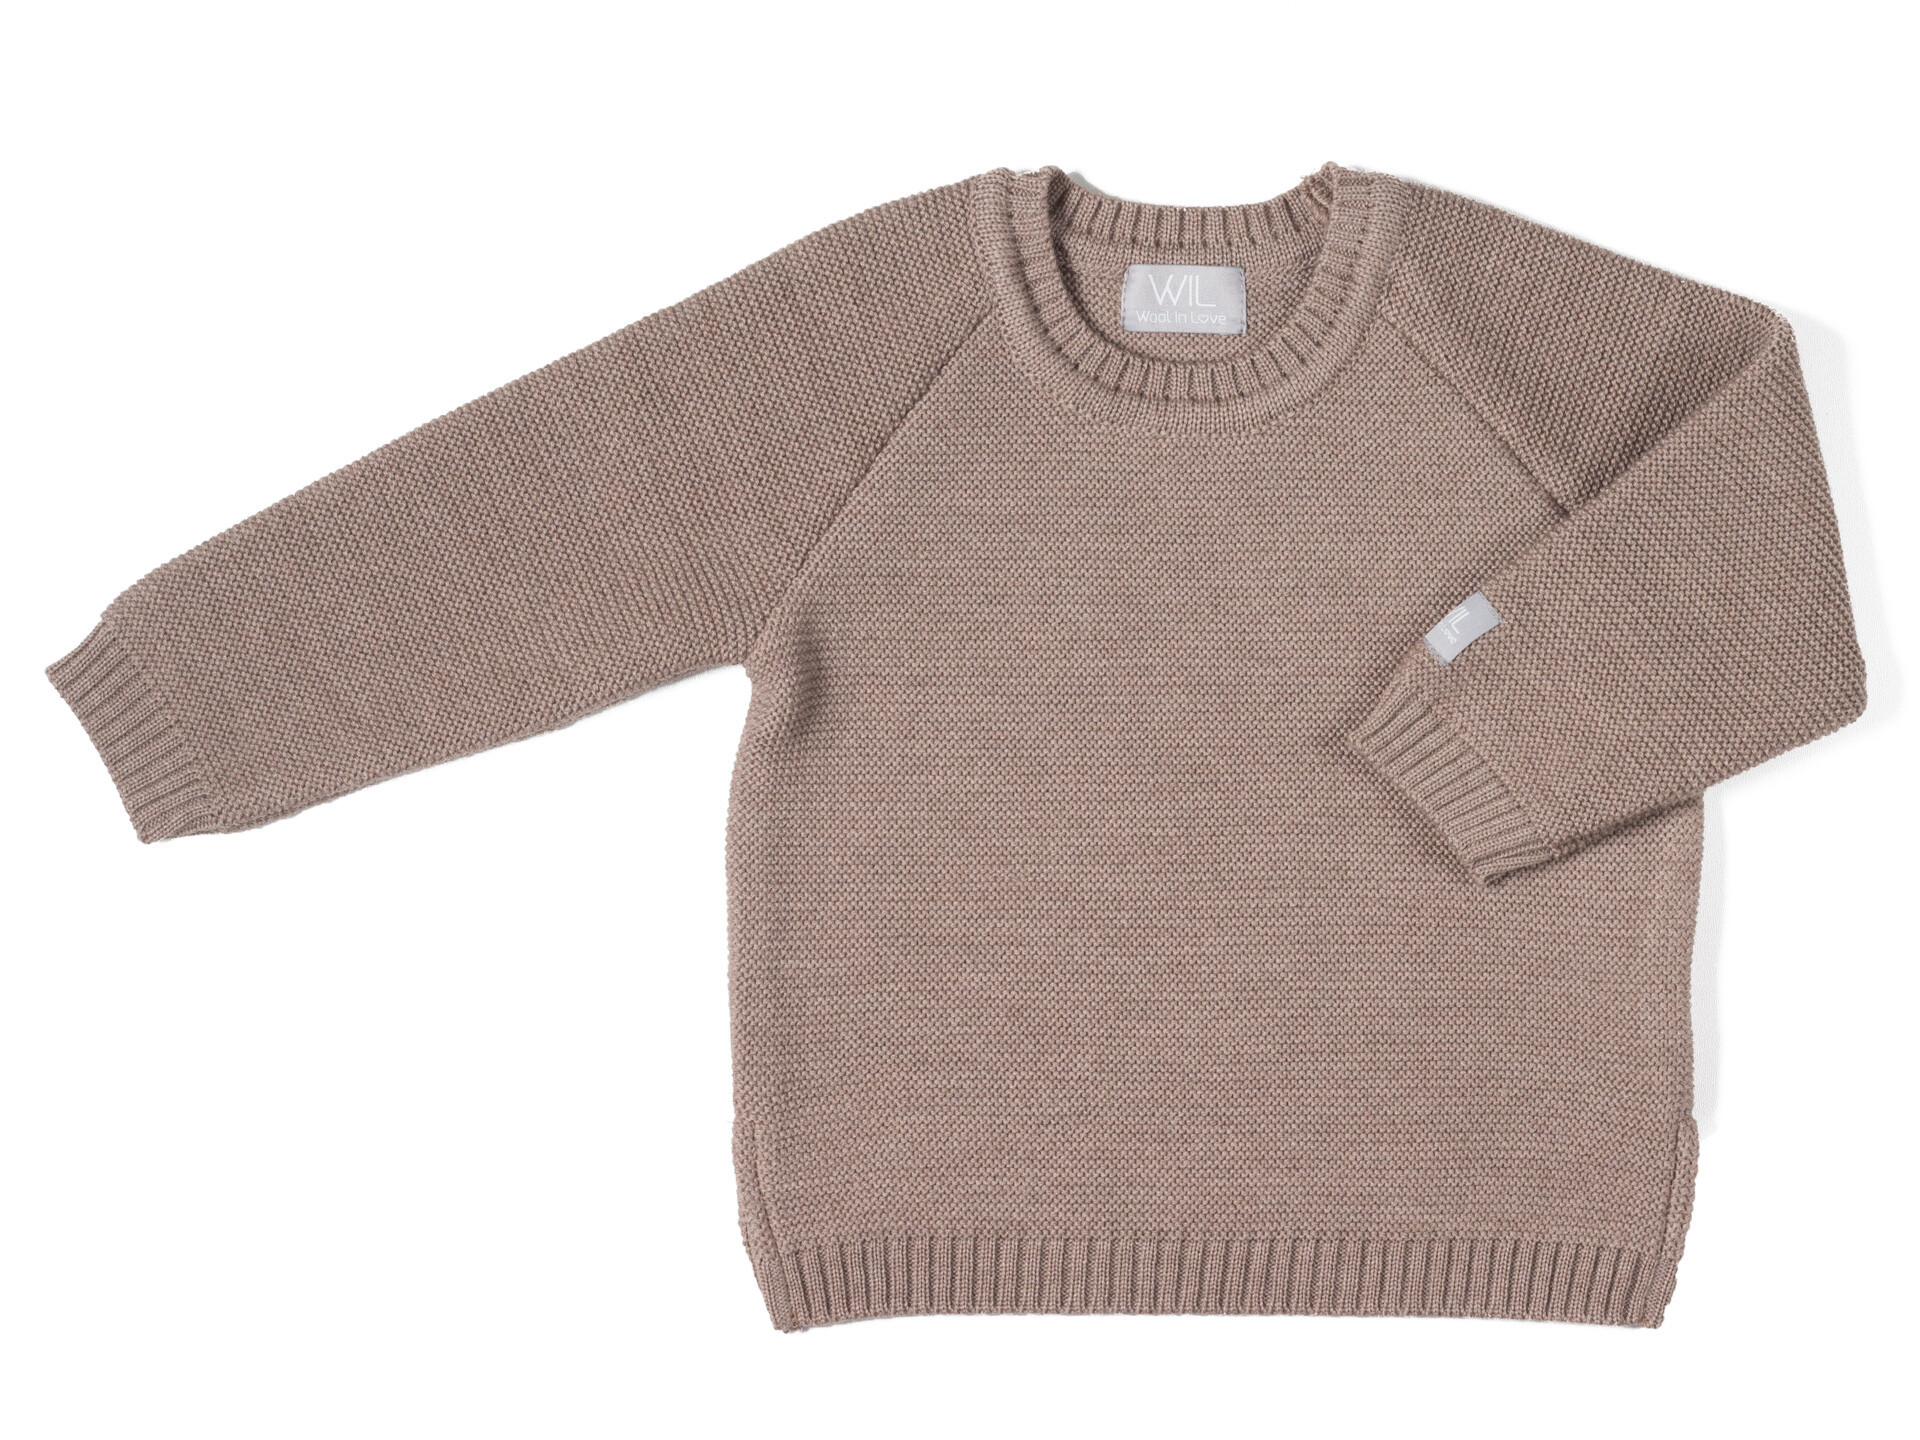 Merino sweater AMITY - Coffee beige - 62